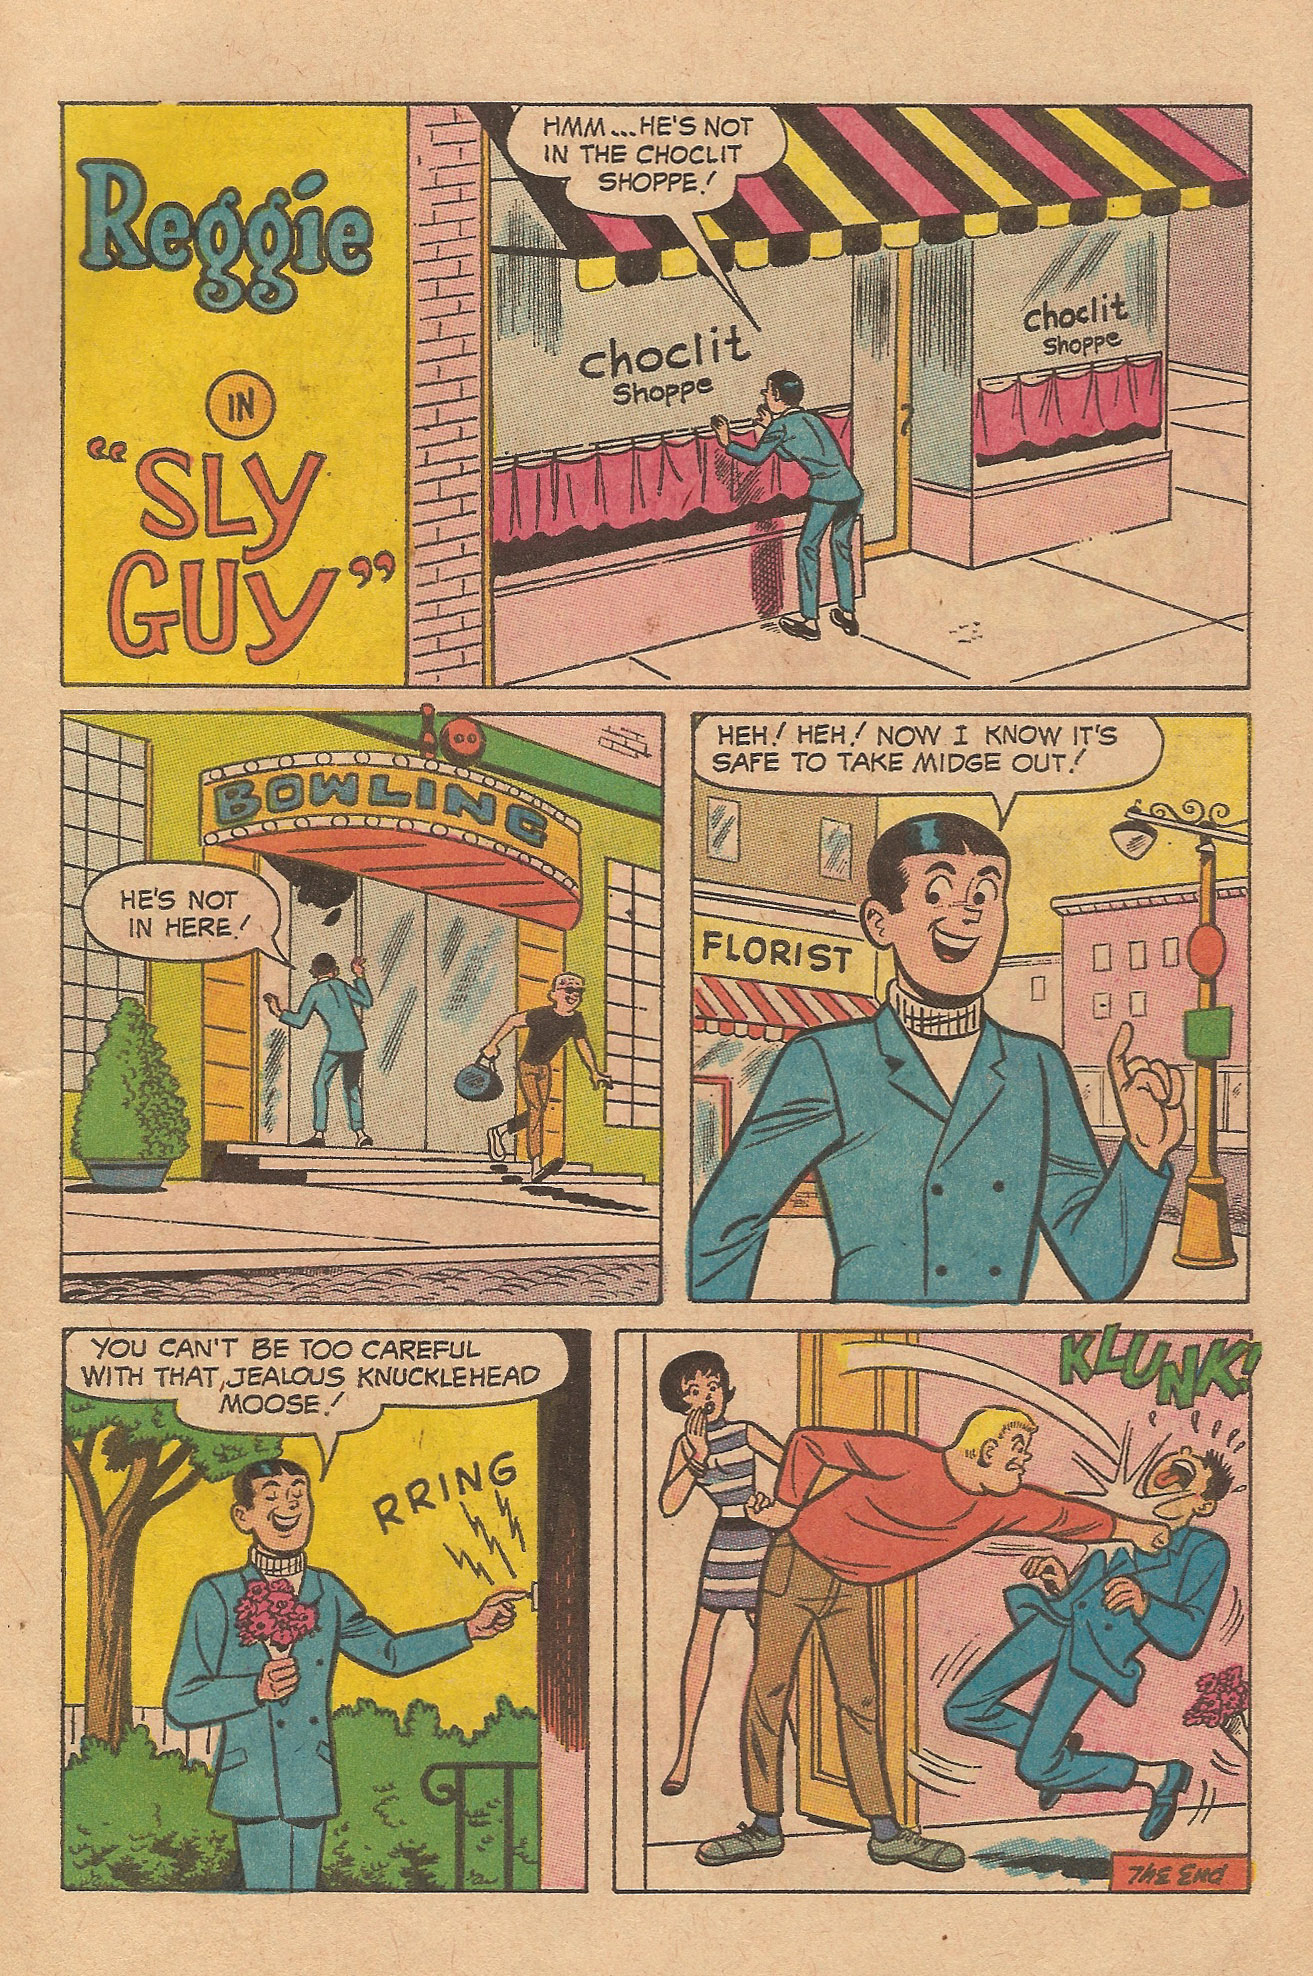 Read online Reggie's Wise Guy Jokes comic -  Issue #4 - 7